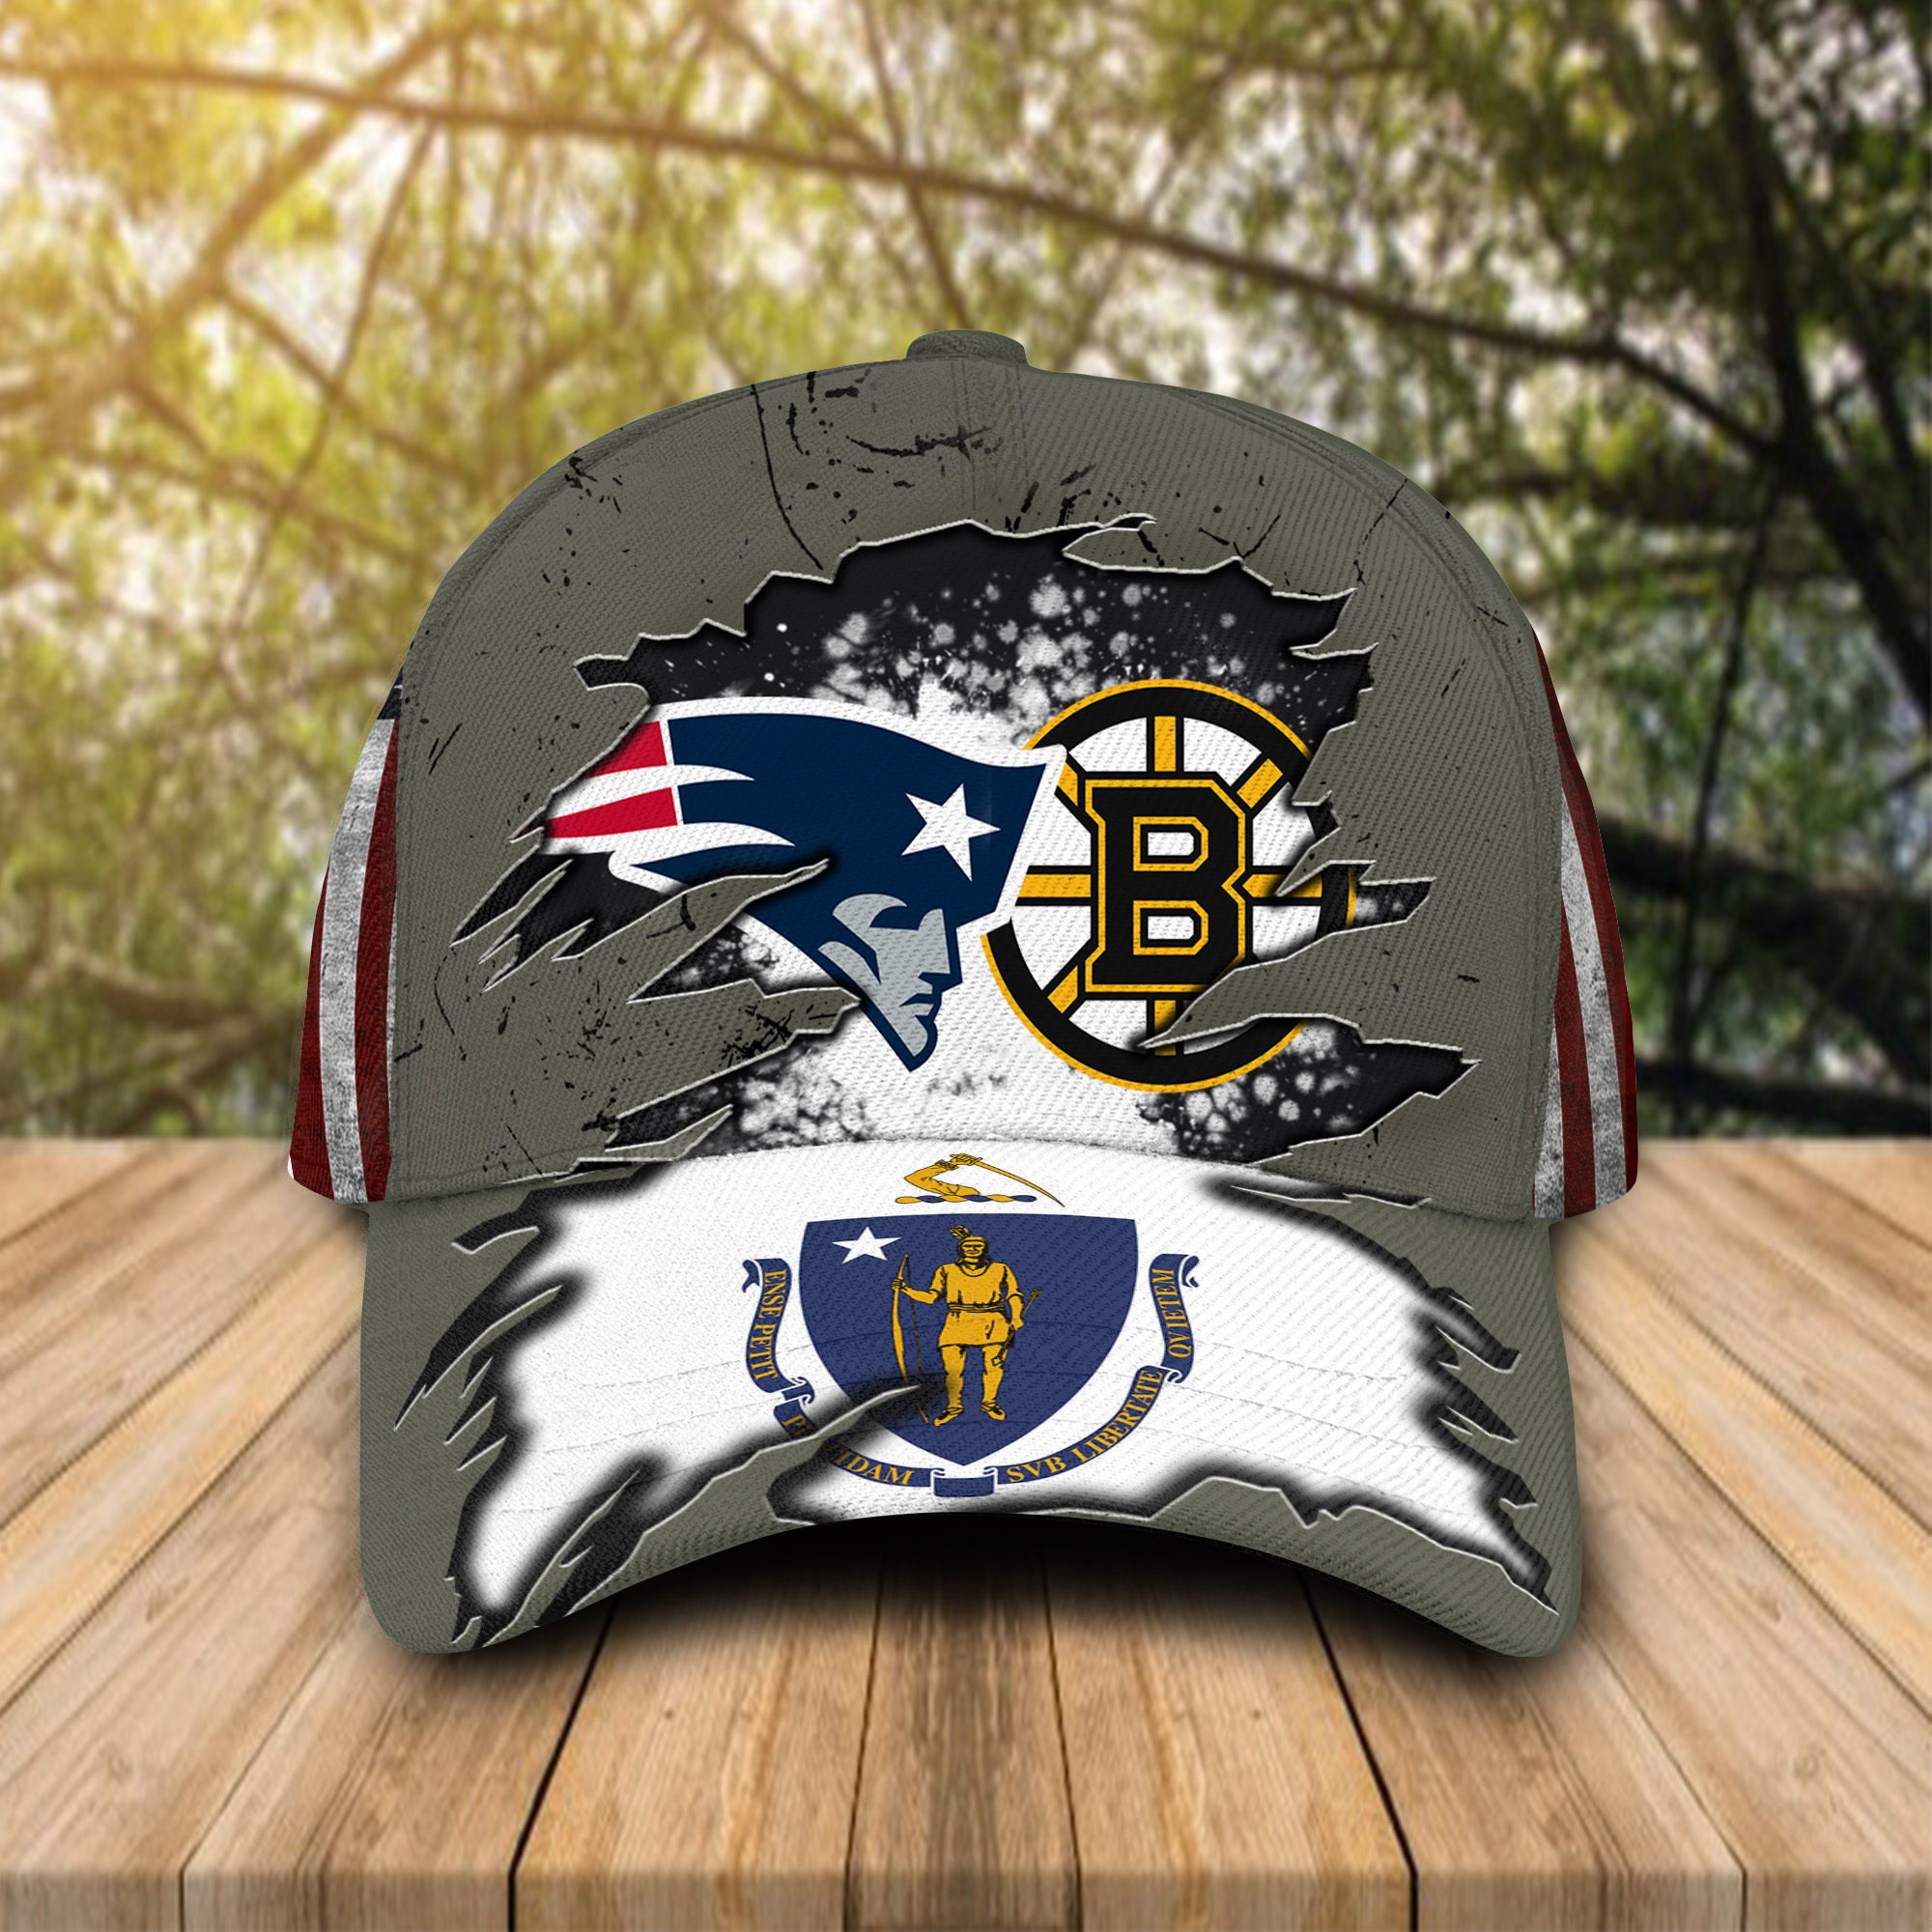 New England Patriots And Boston Bruins Caps & Hats – Hothot 121021